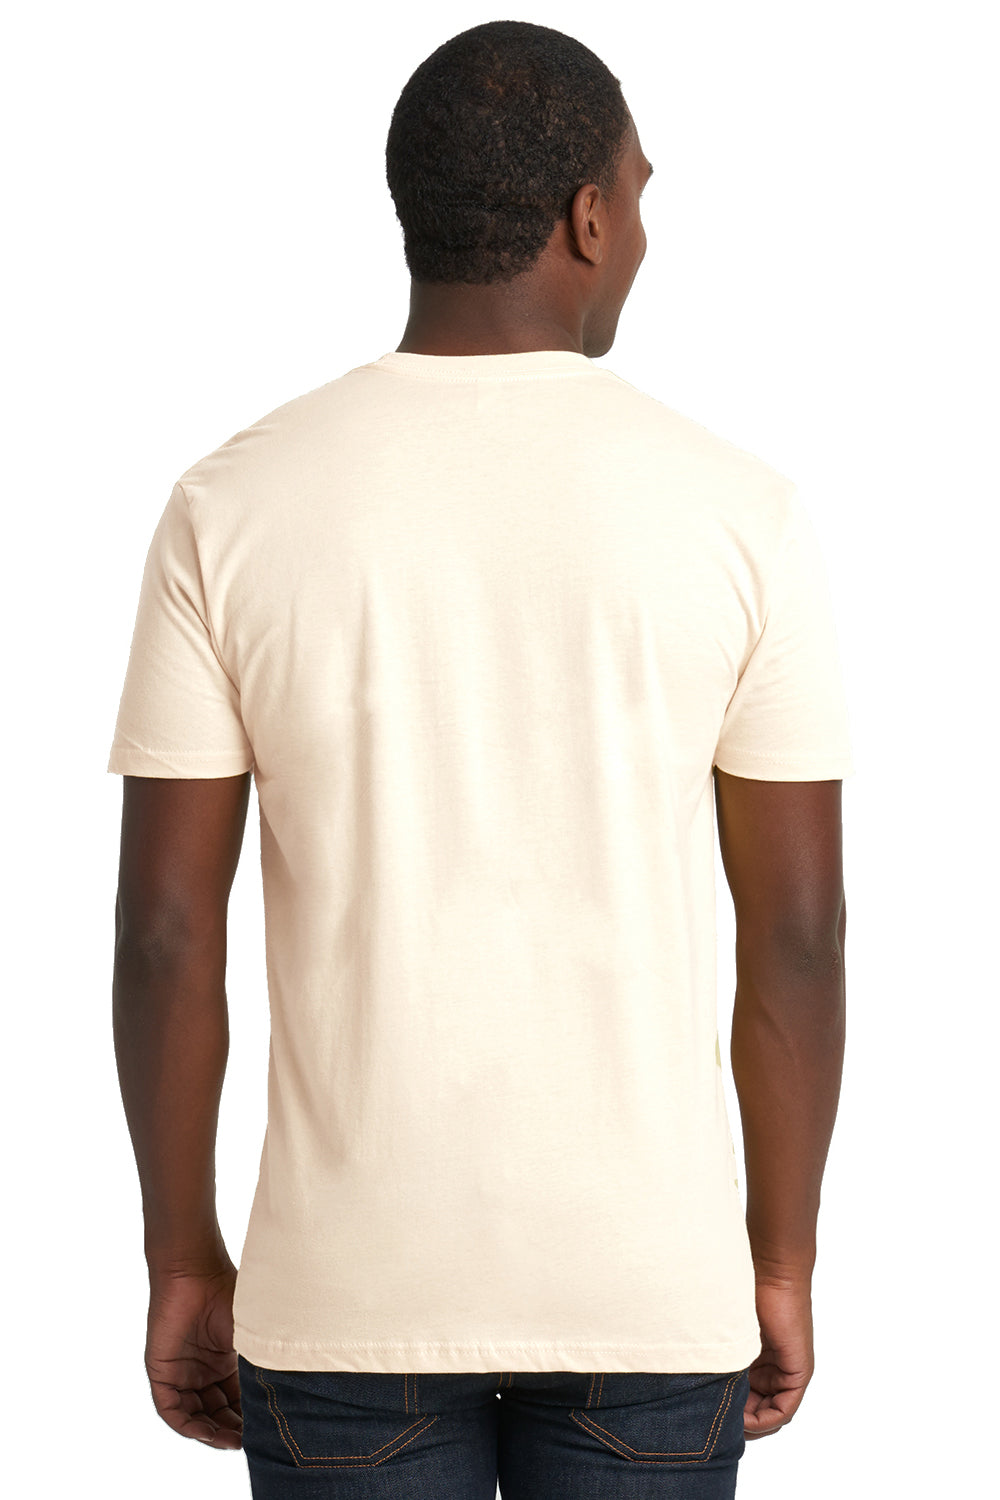 Next Level 3600 Mens Fine Jersey Short Sleeve Crewneck T-Shirt Natural Back